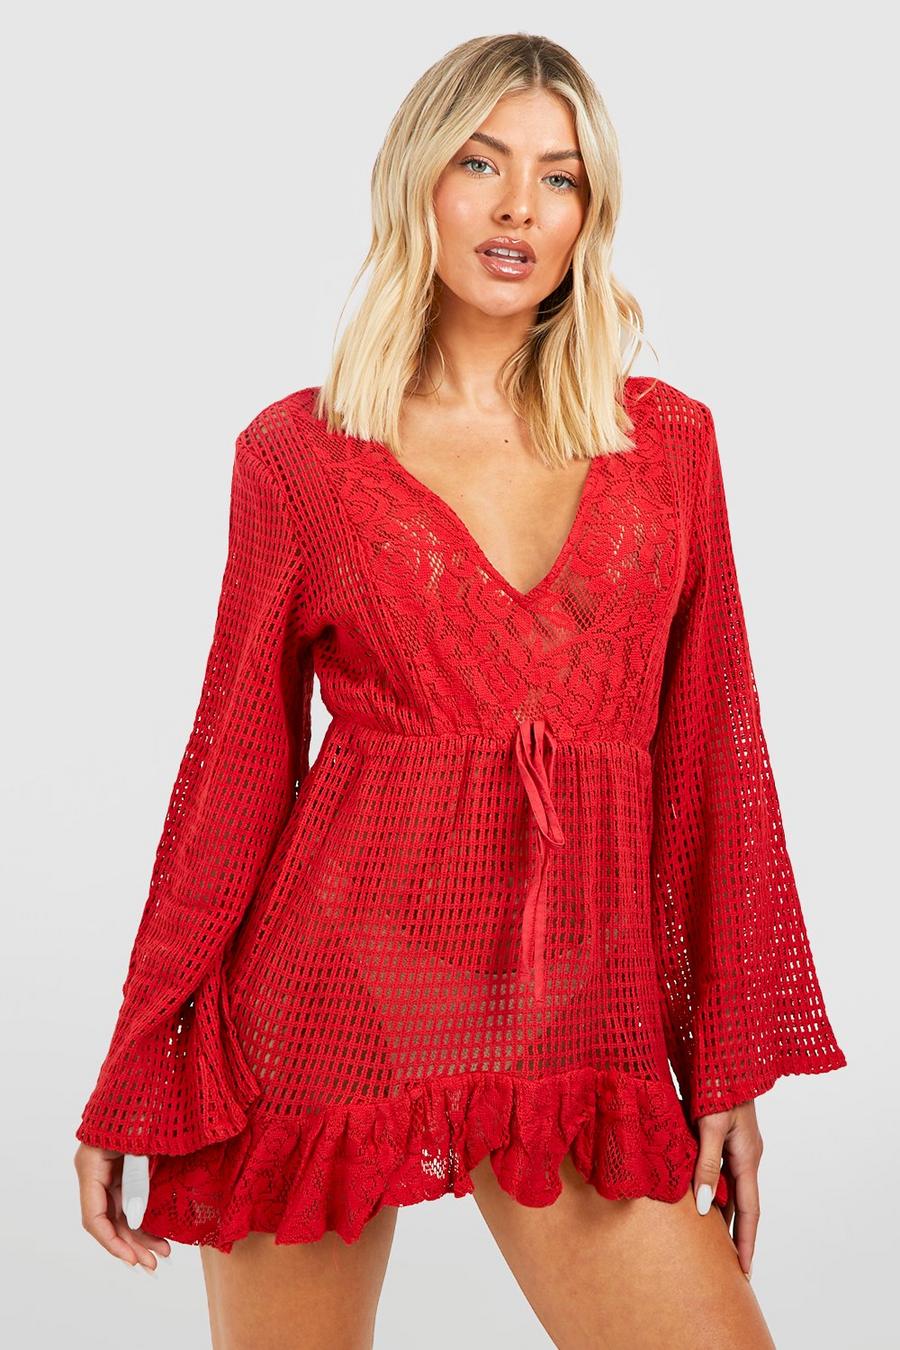 Red Lace Crochet Frill Hem Beach Dress